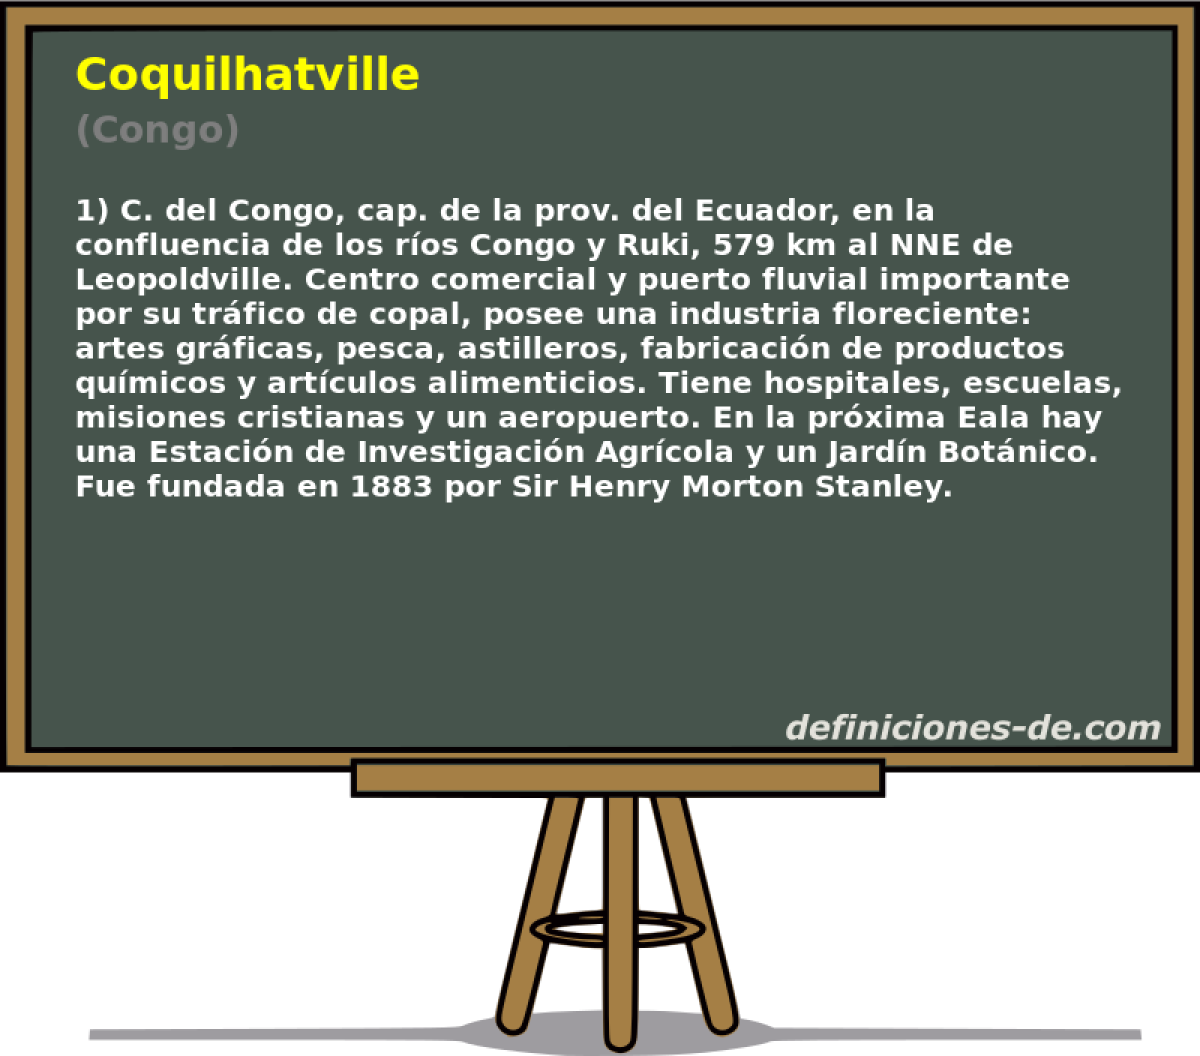 Coquilhatville (Congo)